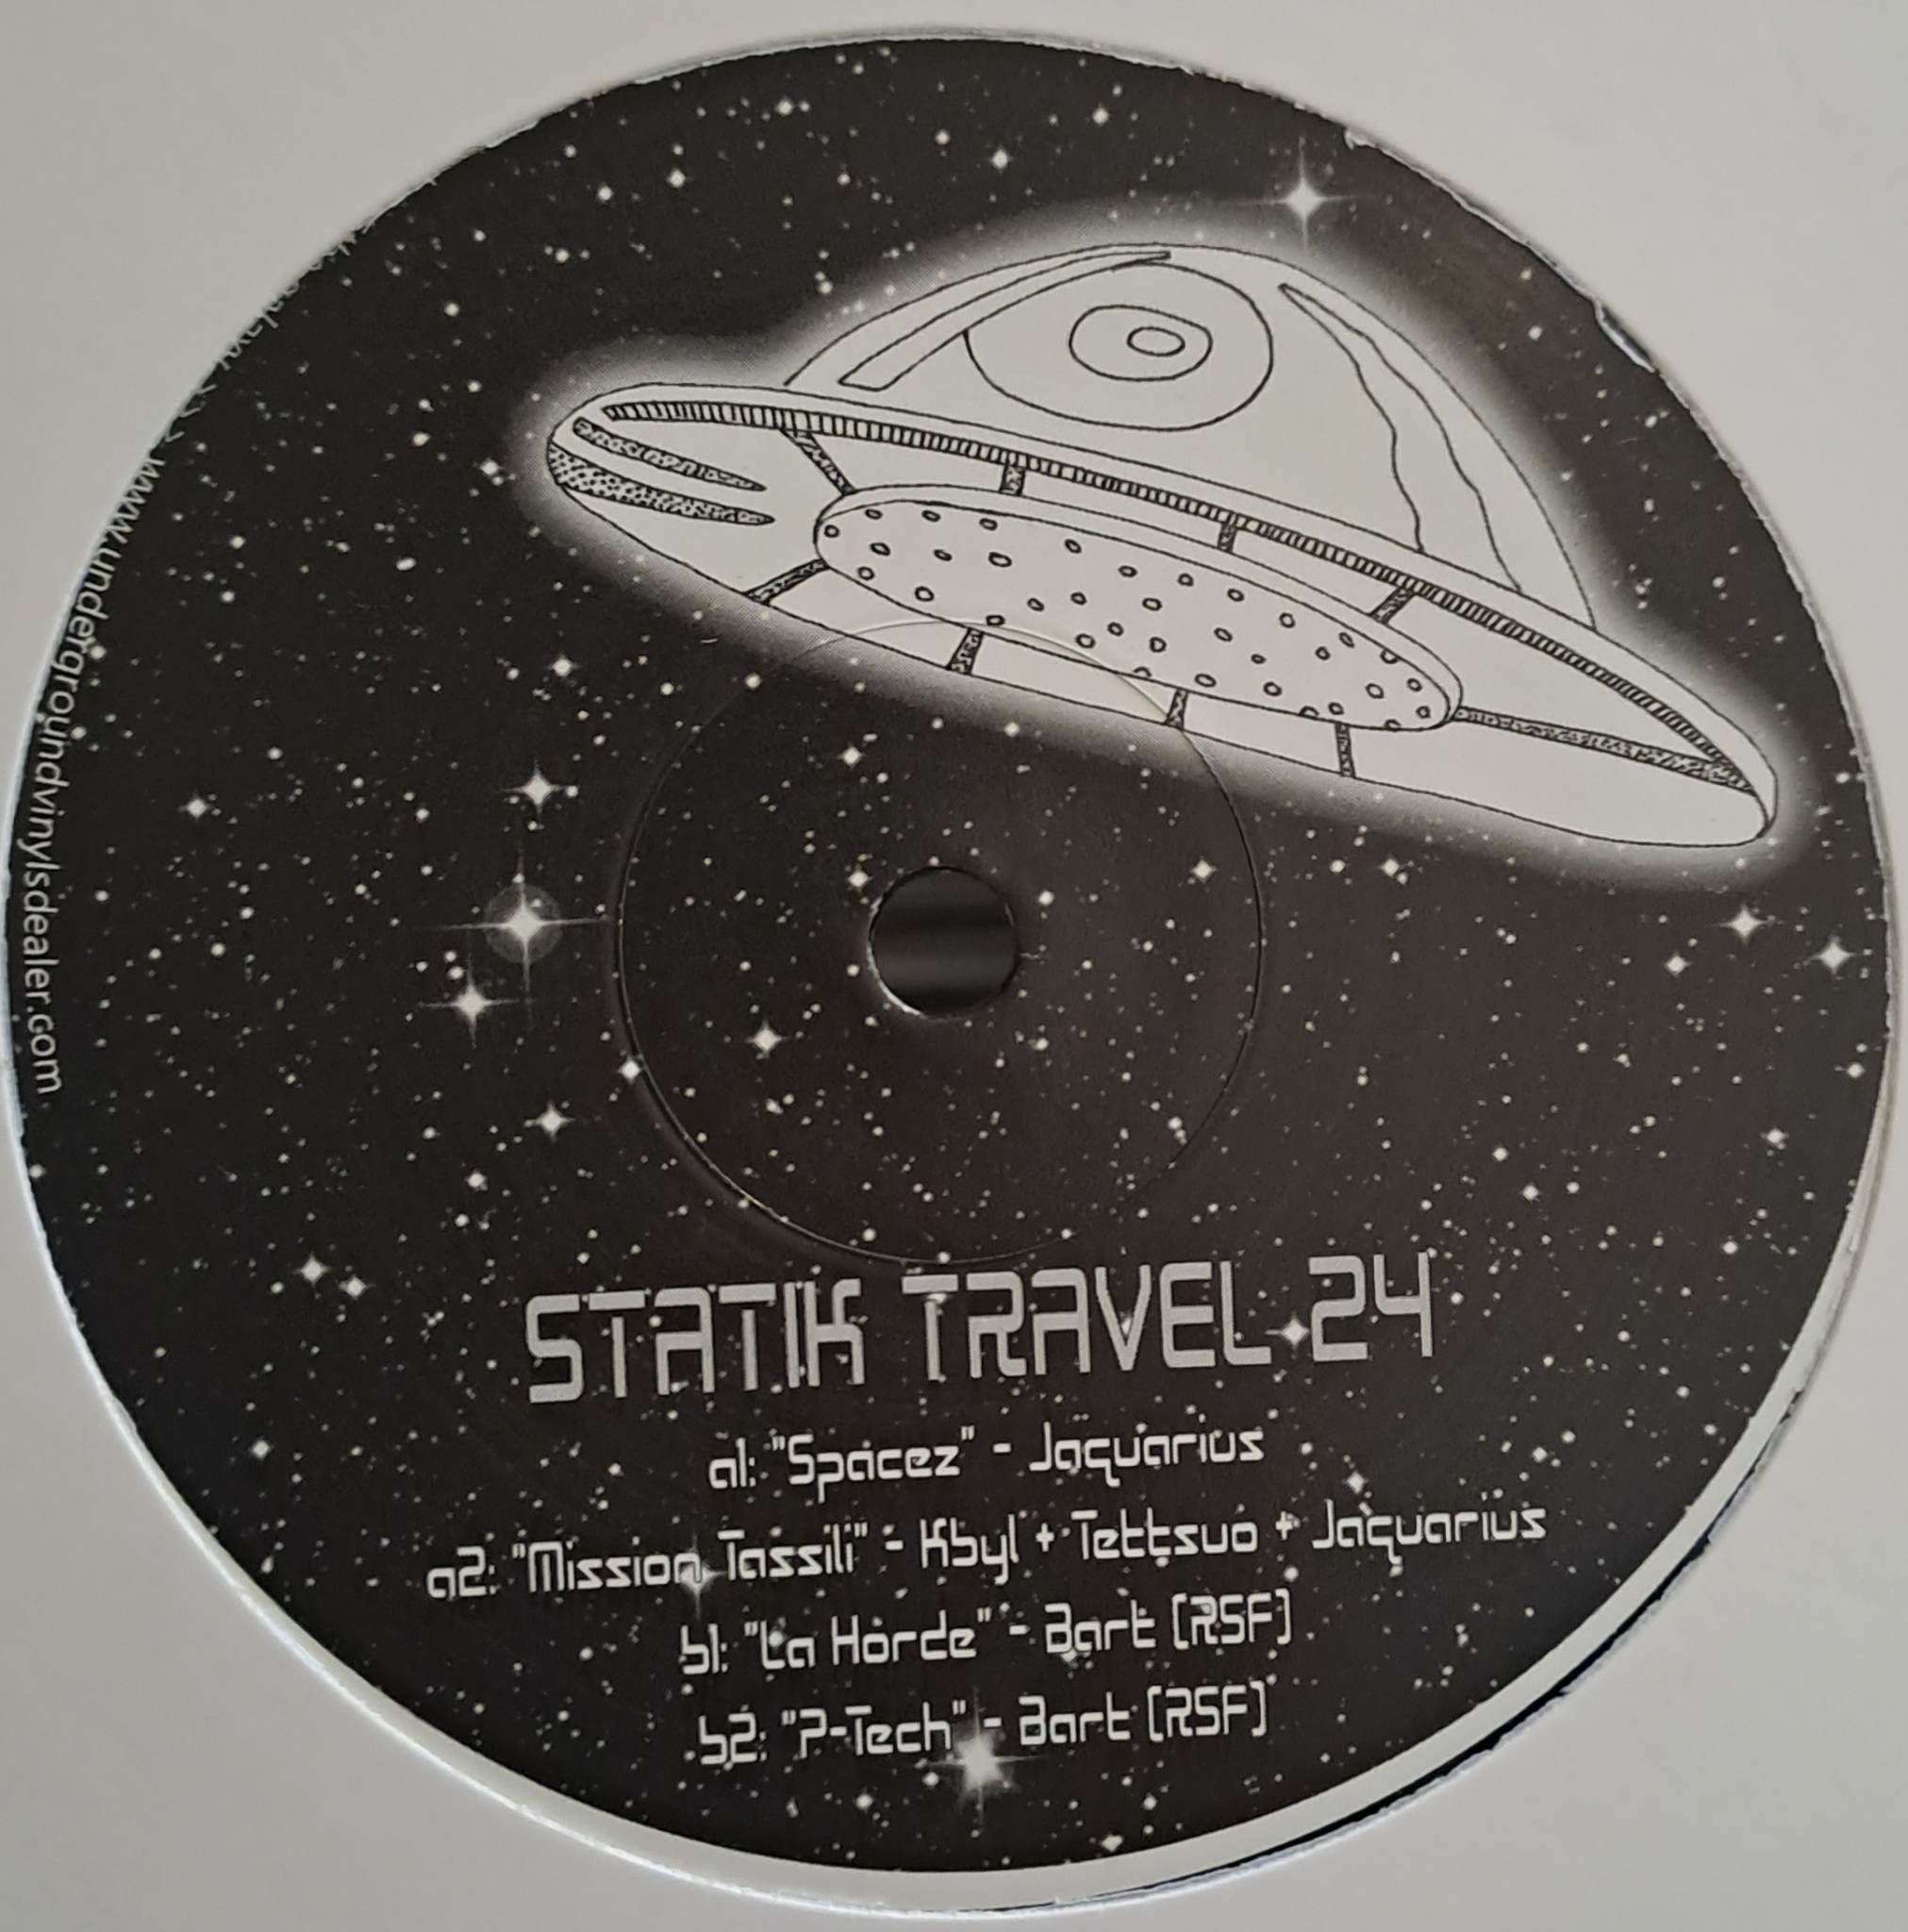 Statik Travel 24 - vinyle freetekno